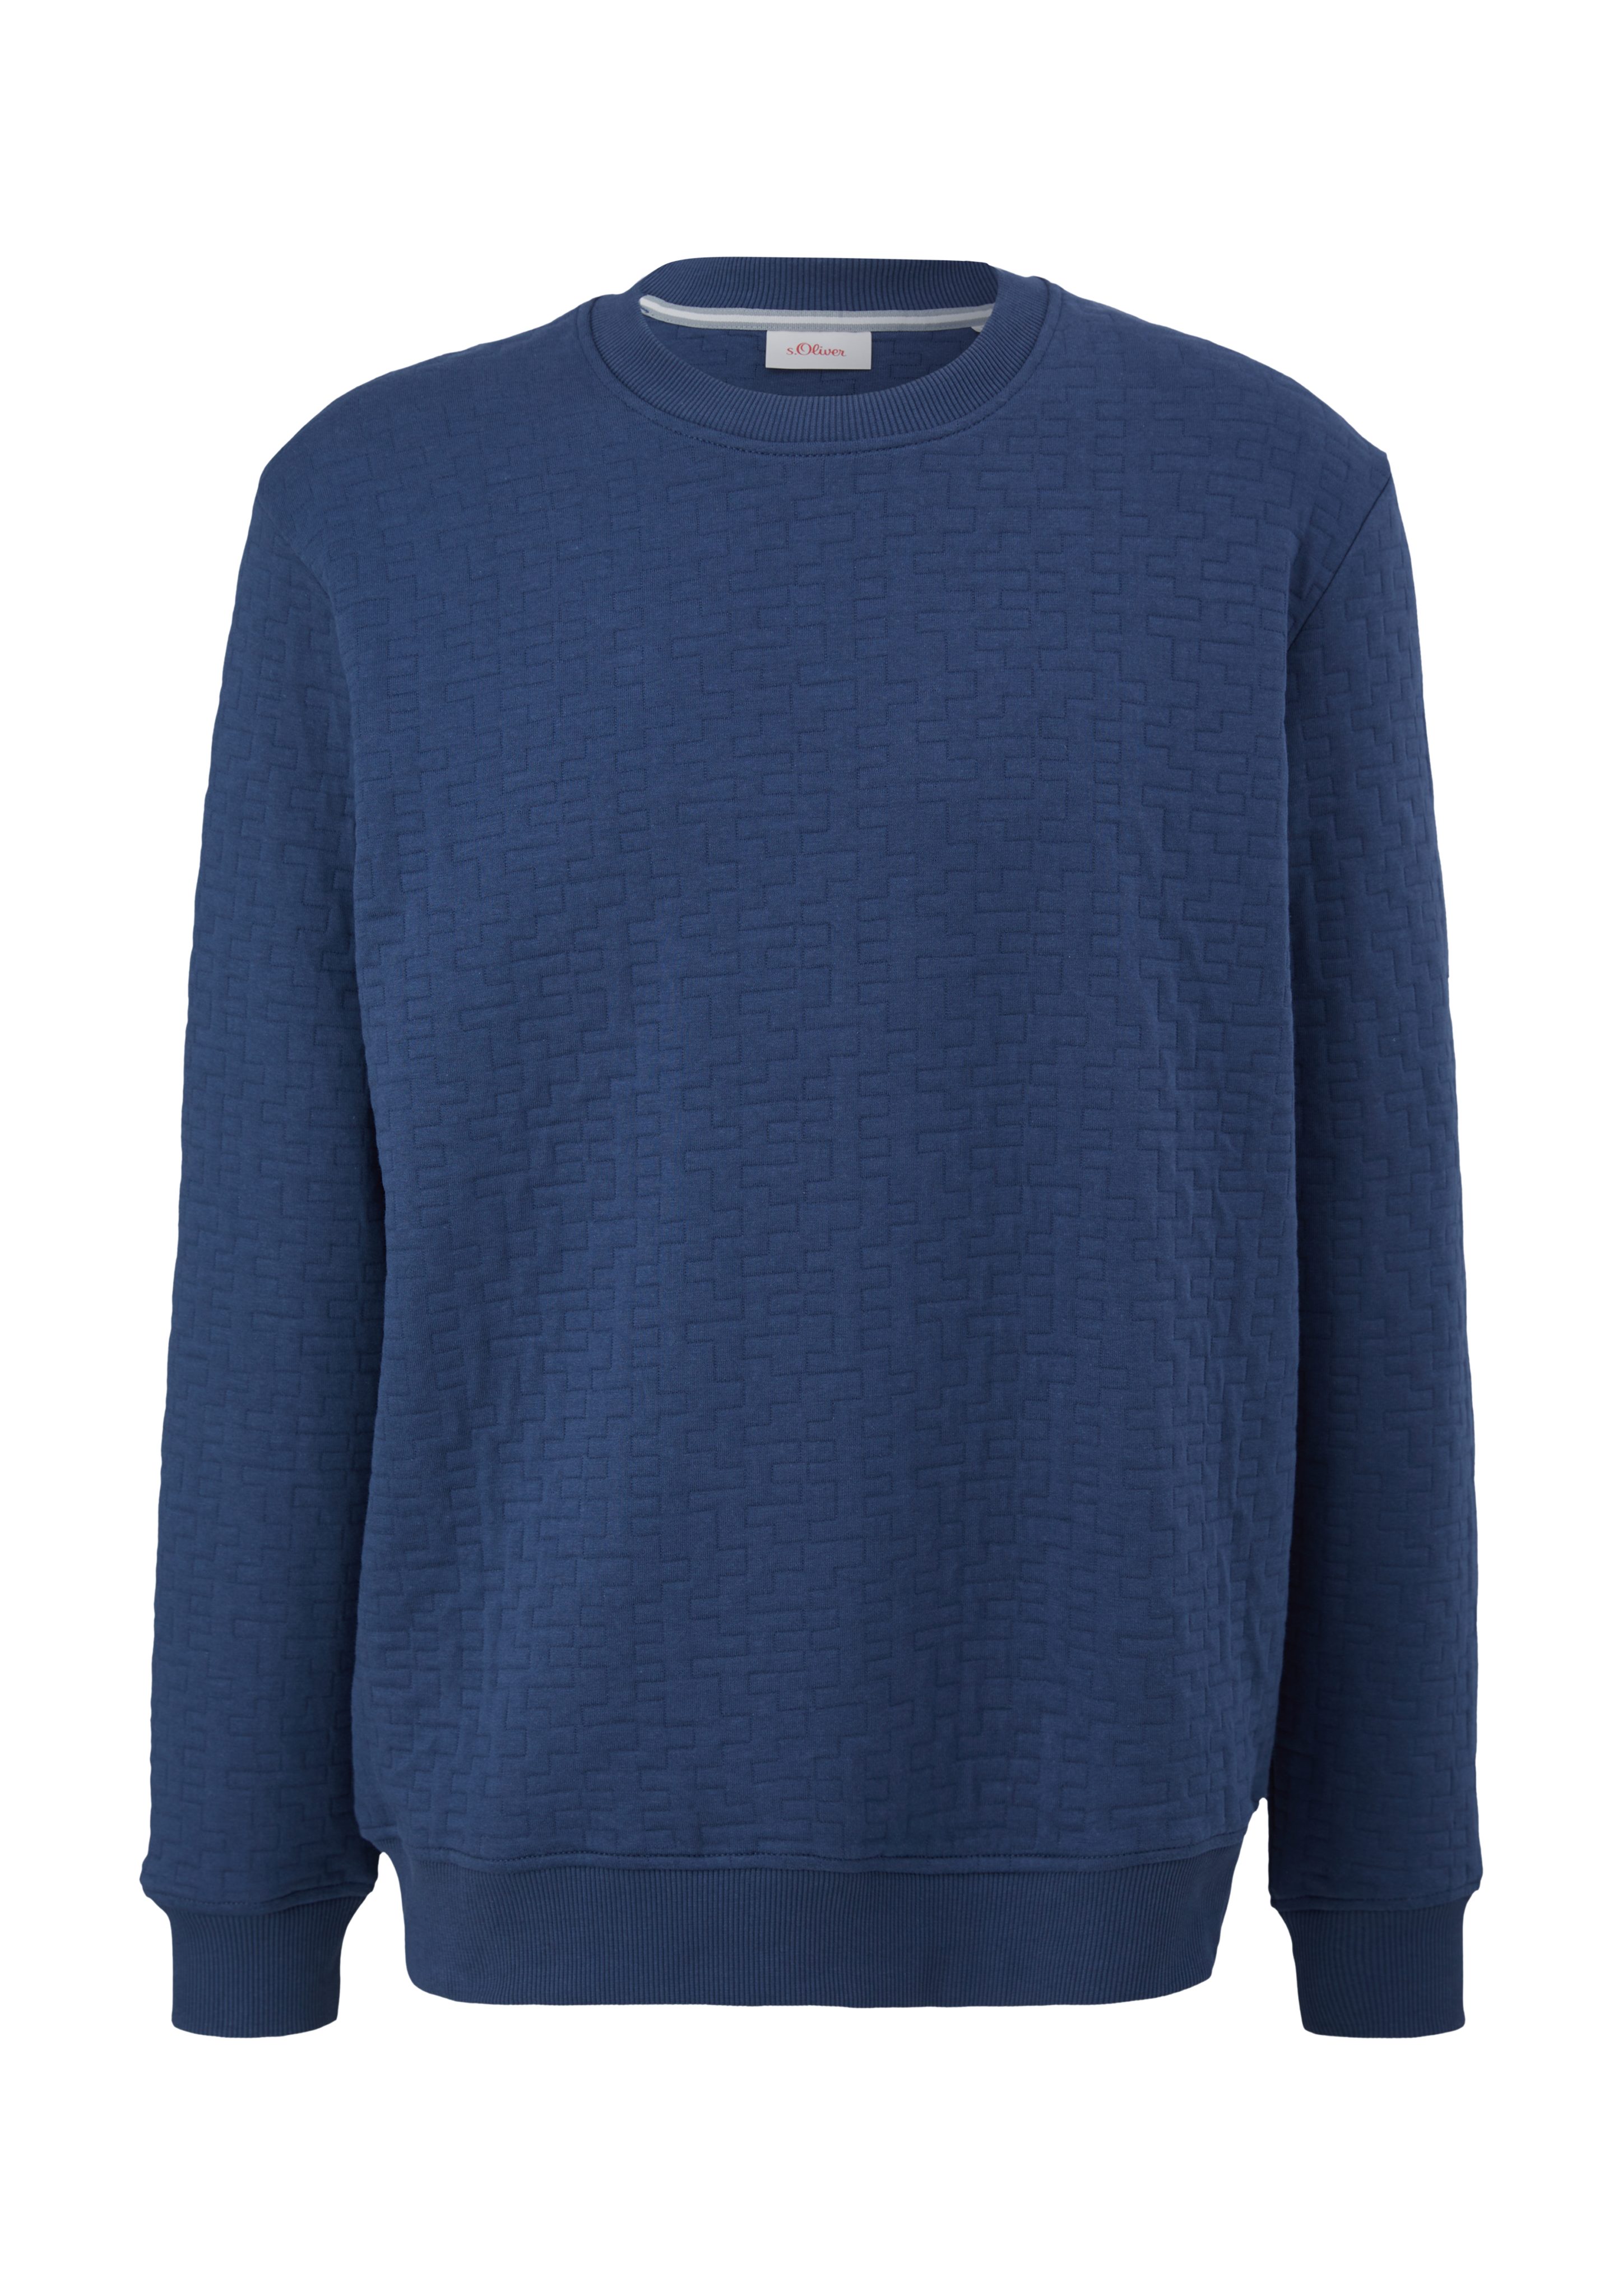 tiefblau Sweatshirt s.Oliver Musterstruktur mit Sweatshirt